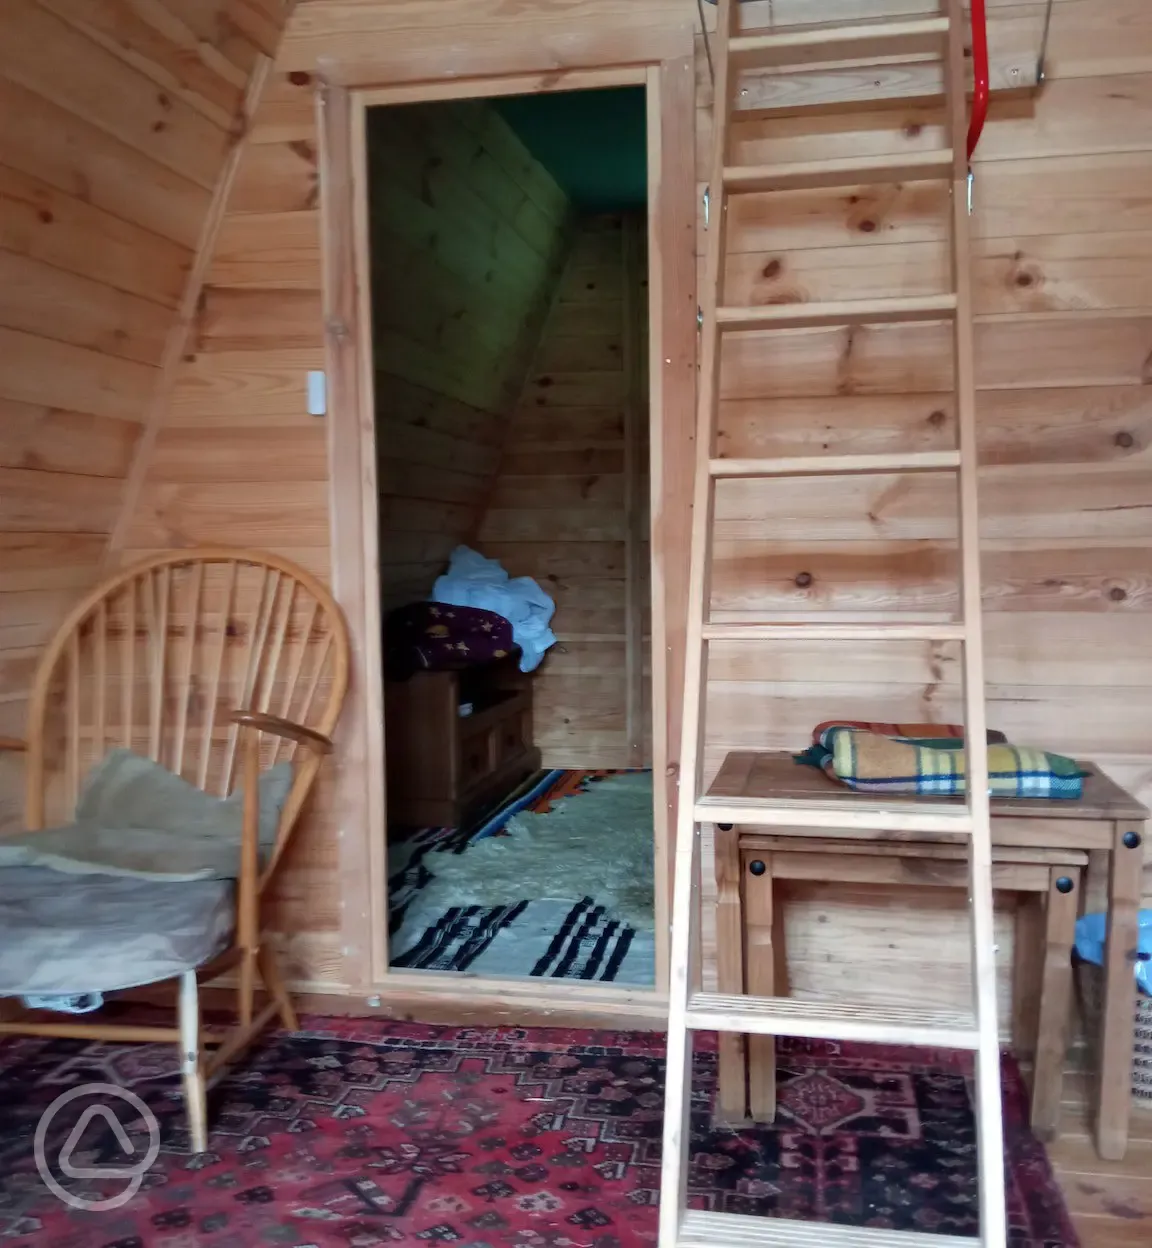 Inside of hut